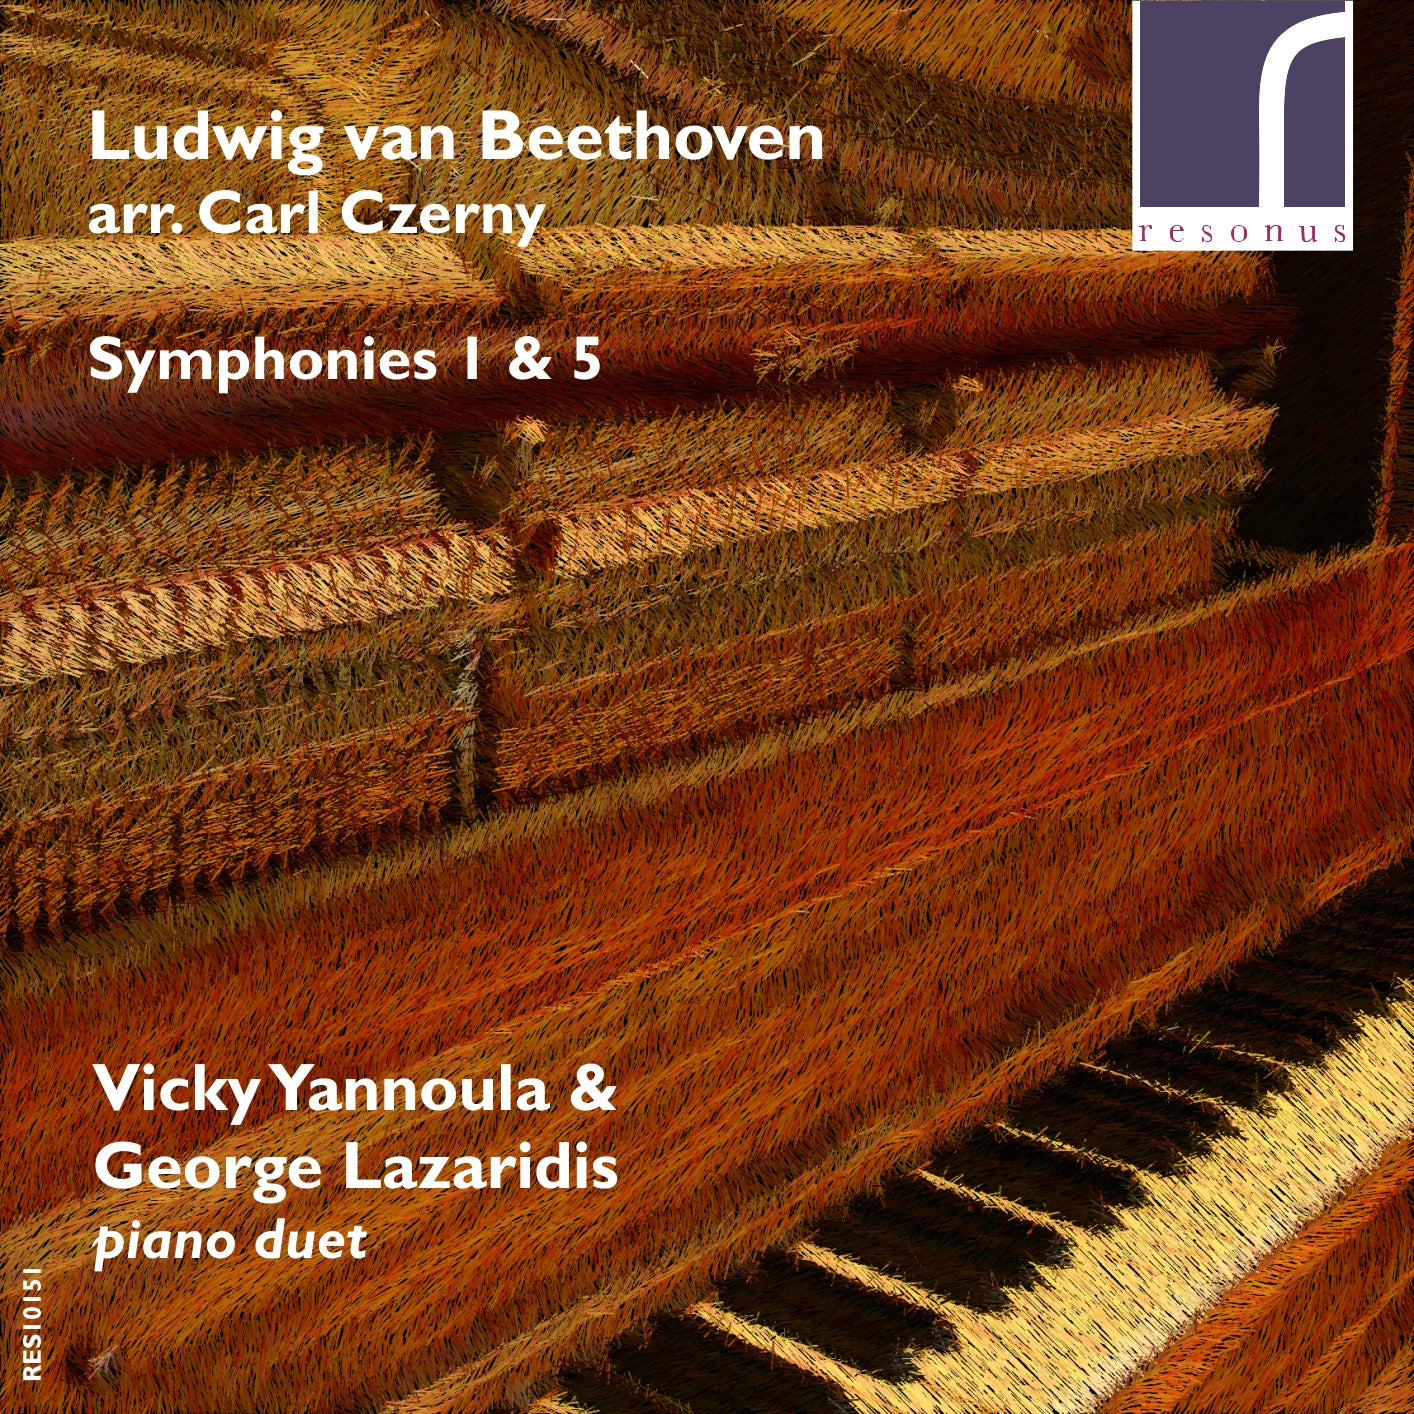 Beethoven (arr. Carl Czerny): Symphonies 1 & 5